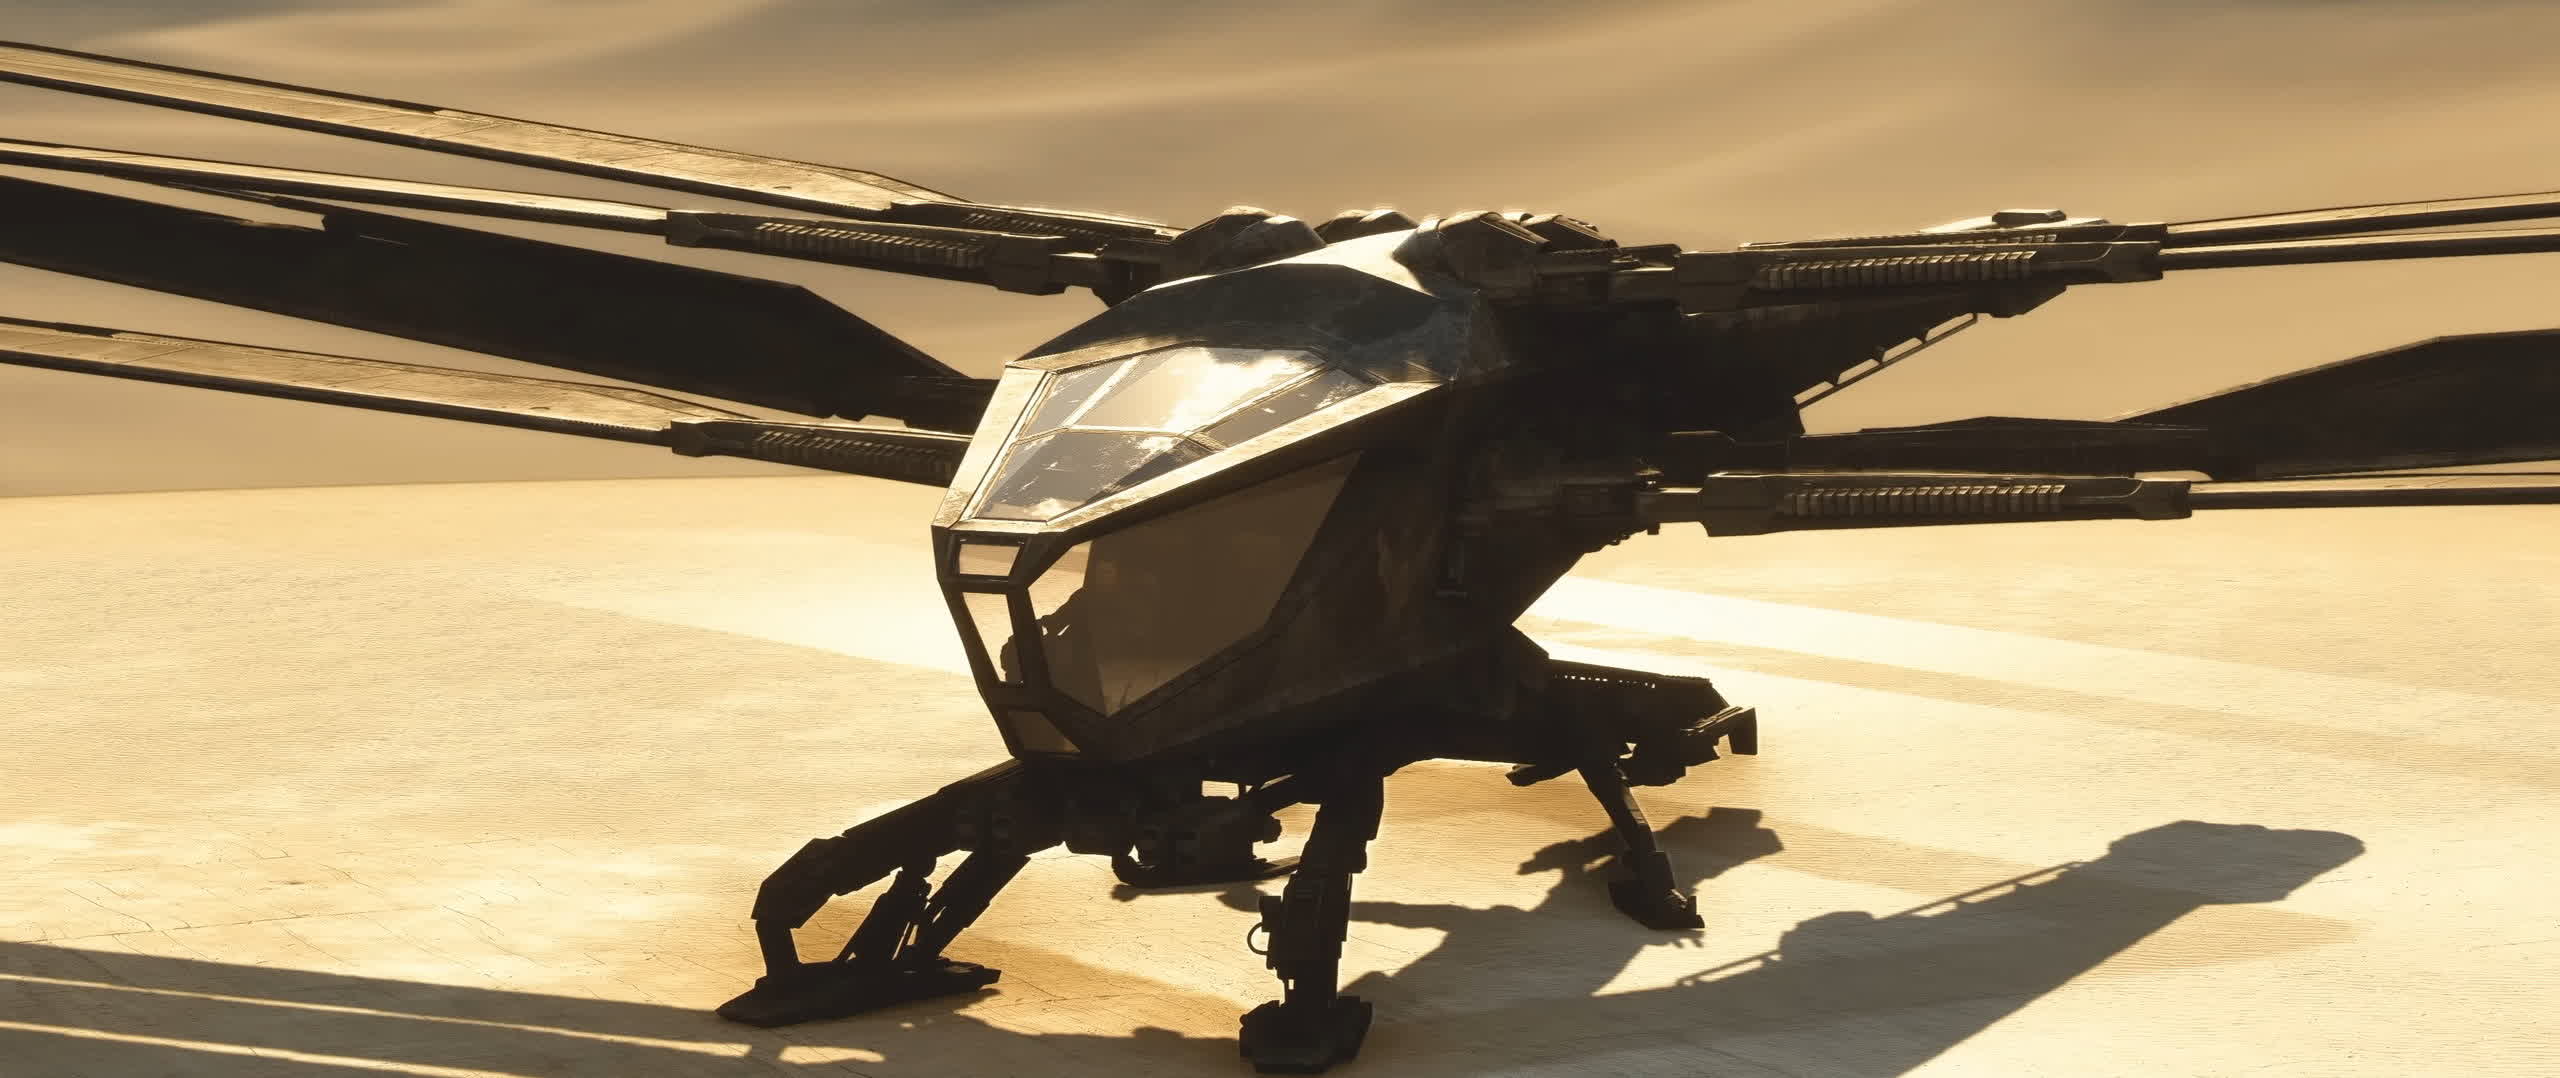 Microsoft Flight Simulator takes players to Dune's sci-fi desert world of Arrakis thumbnail